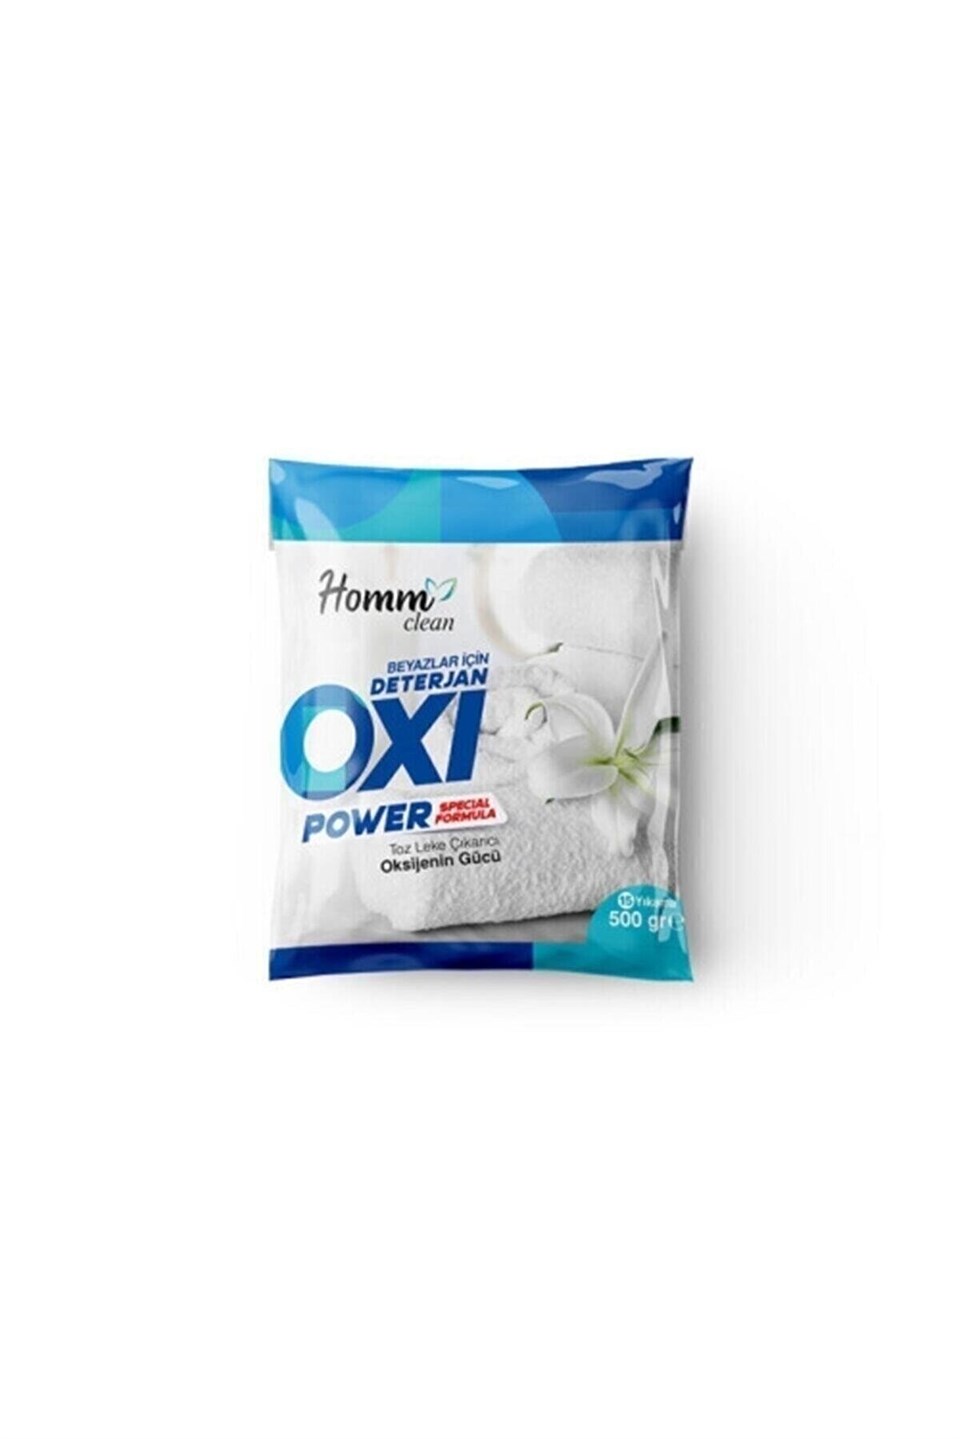 Homm Clean Oxi Power Leke Çıkarıcı 500 gr I Temizlik & Hijyen I Herodanal